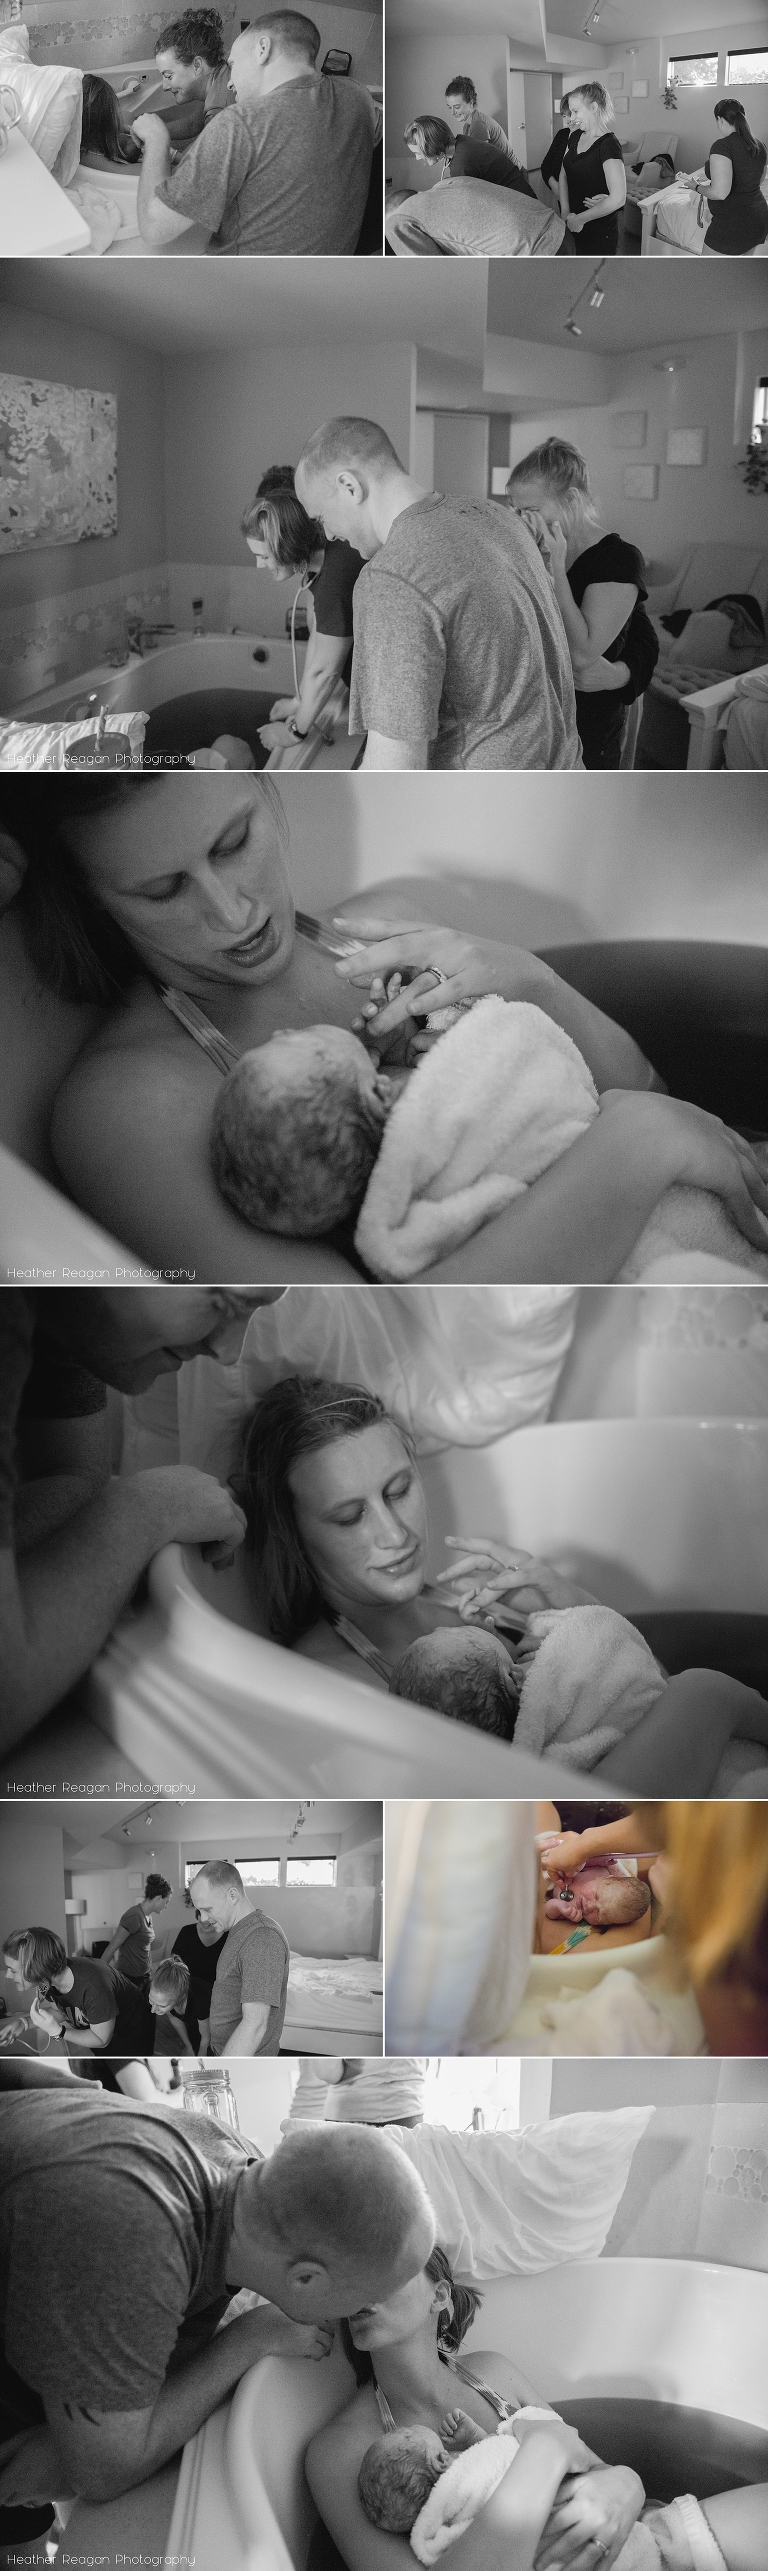 Baby L - Portland Oregon birth center - Birth Photography